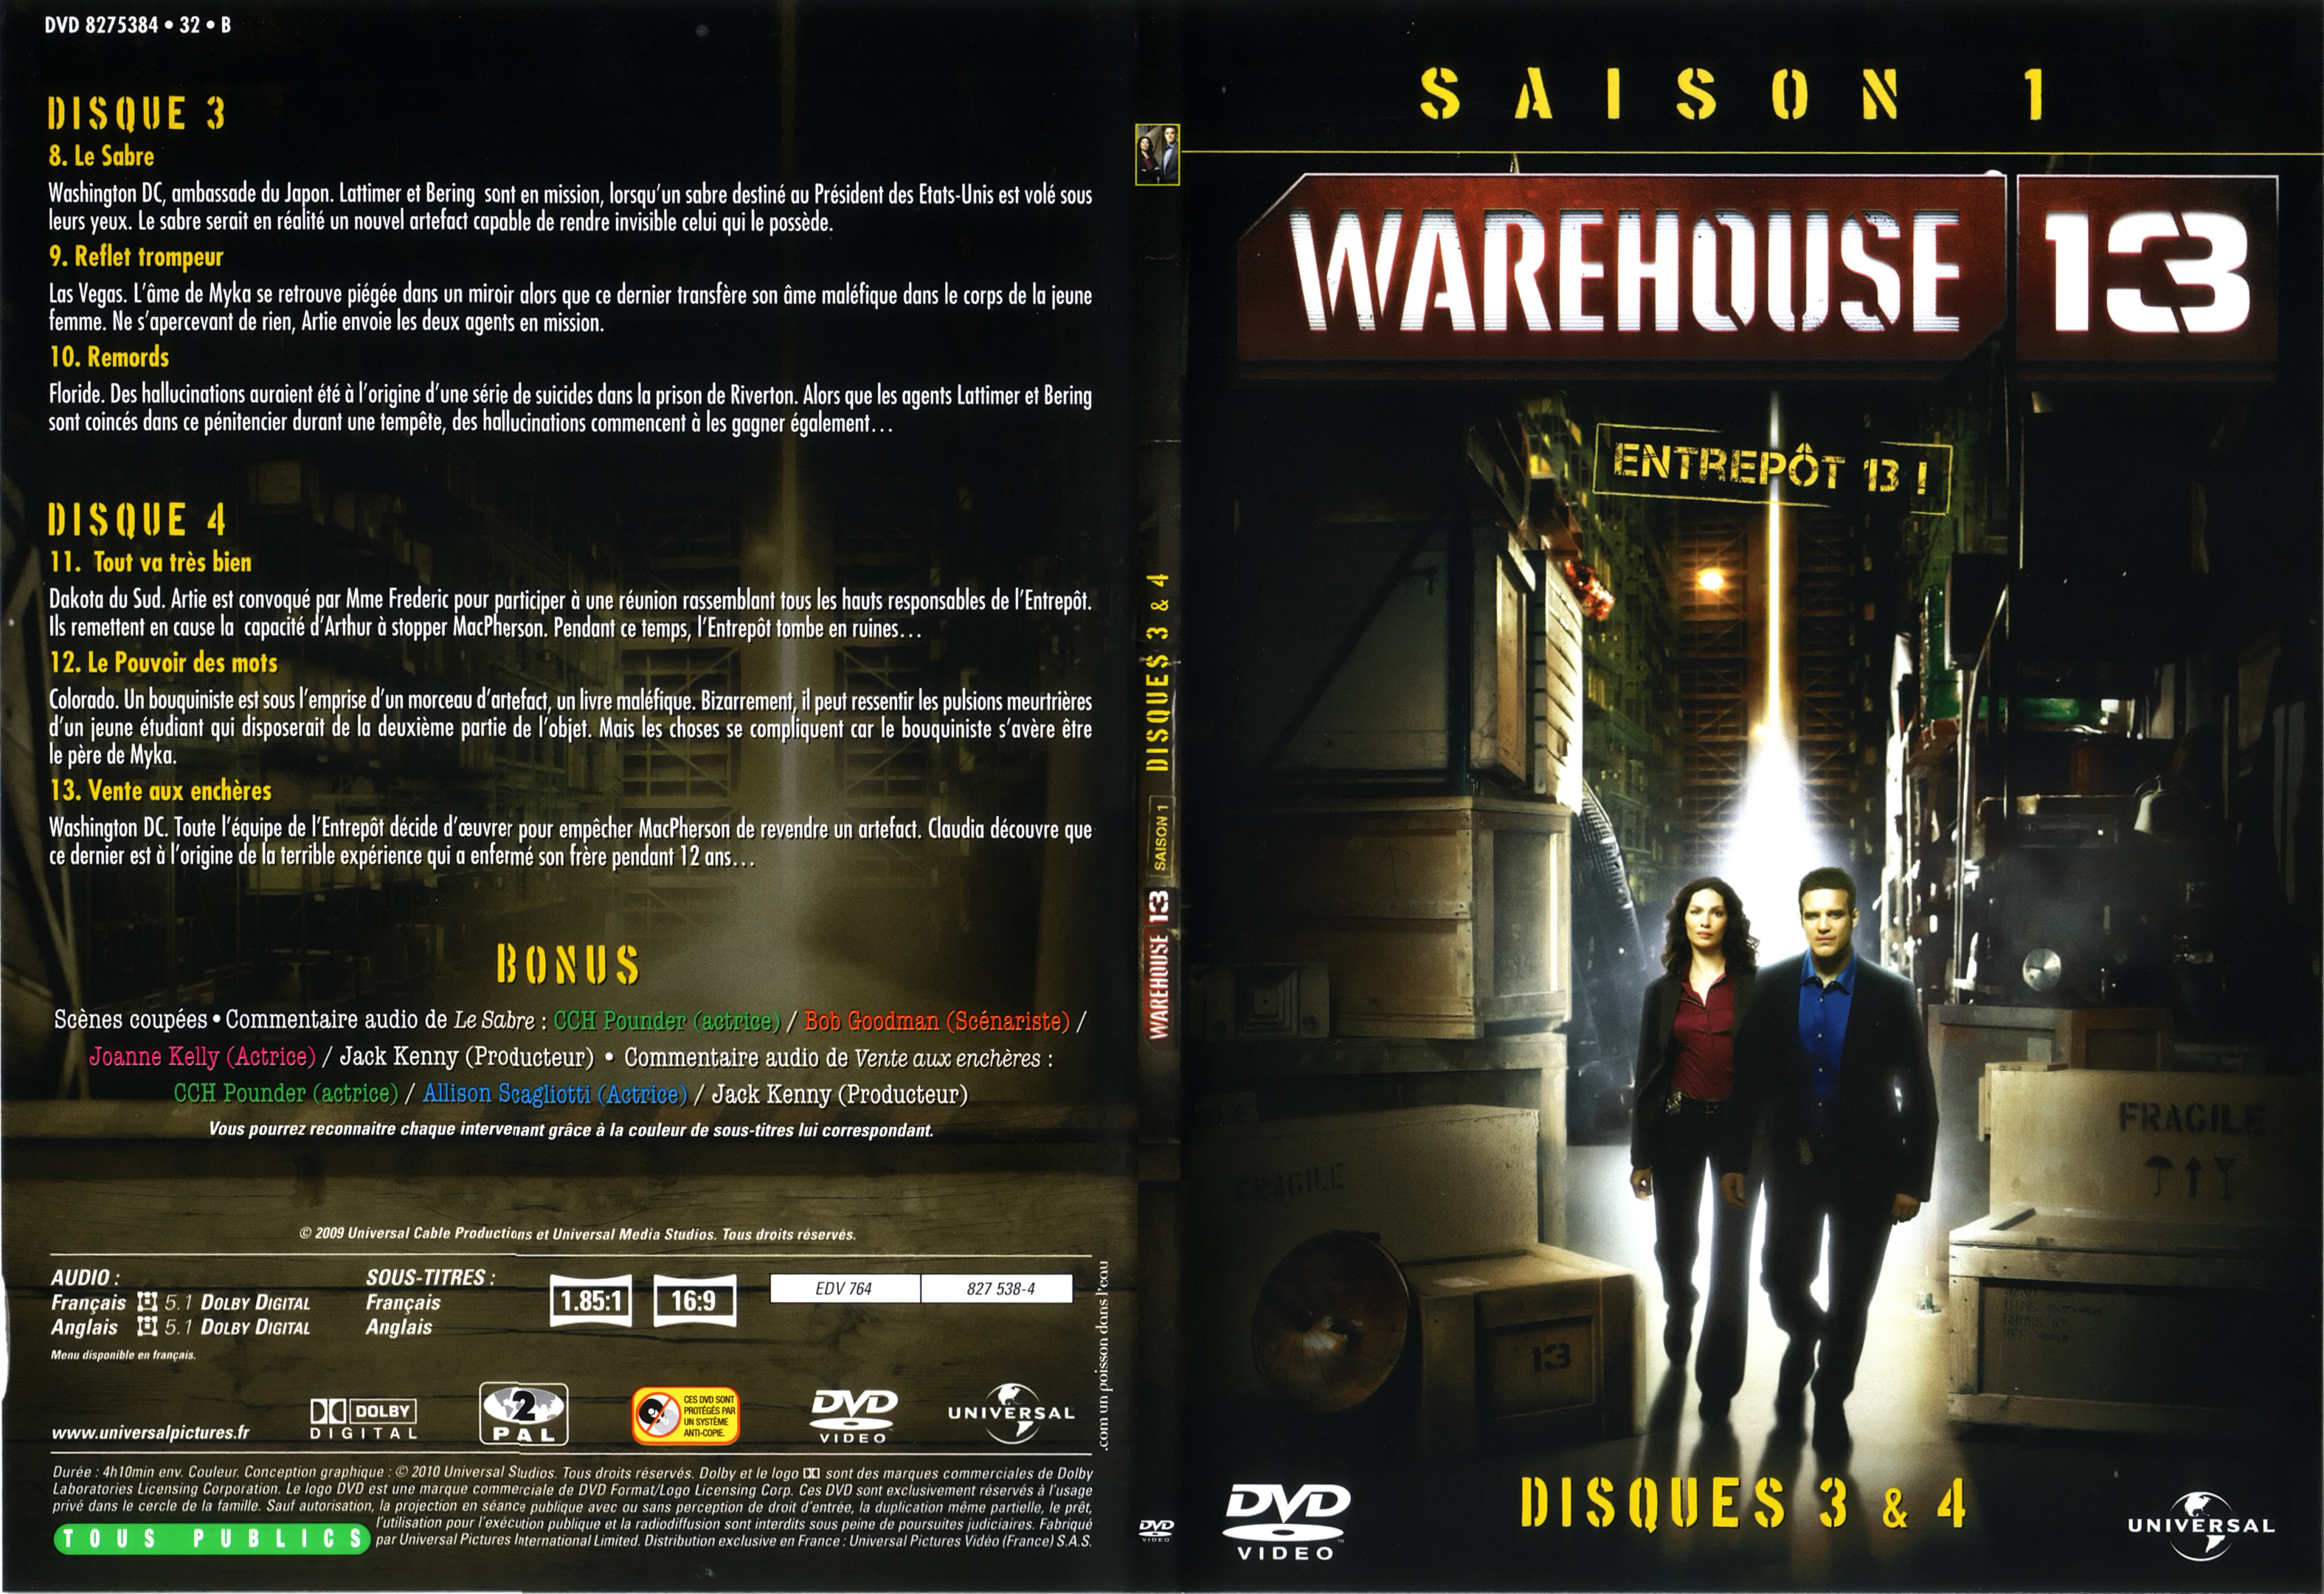 Jaquette DVD Warehouse 13 saison 1 DVD 2